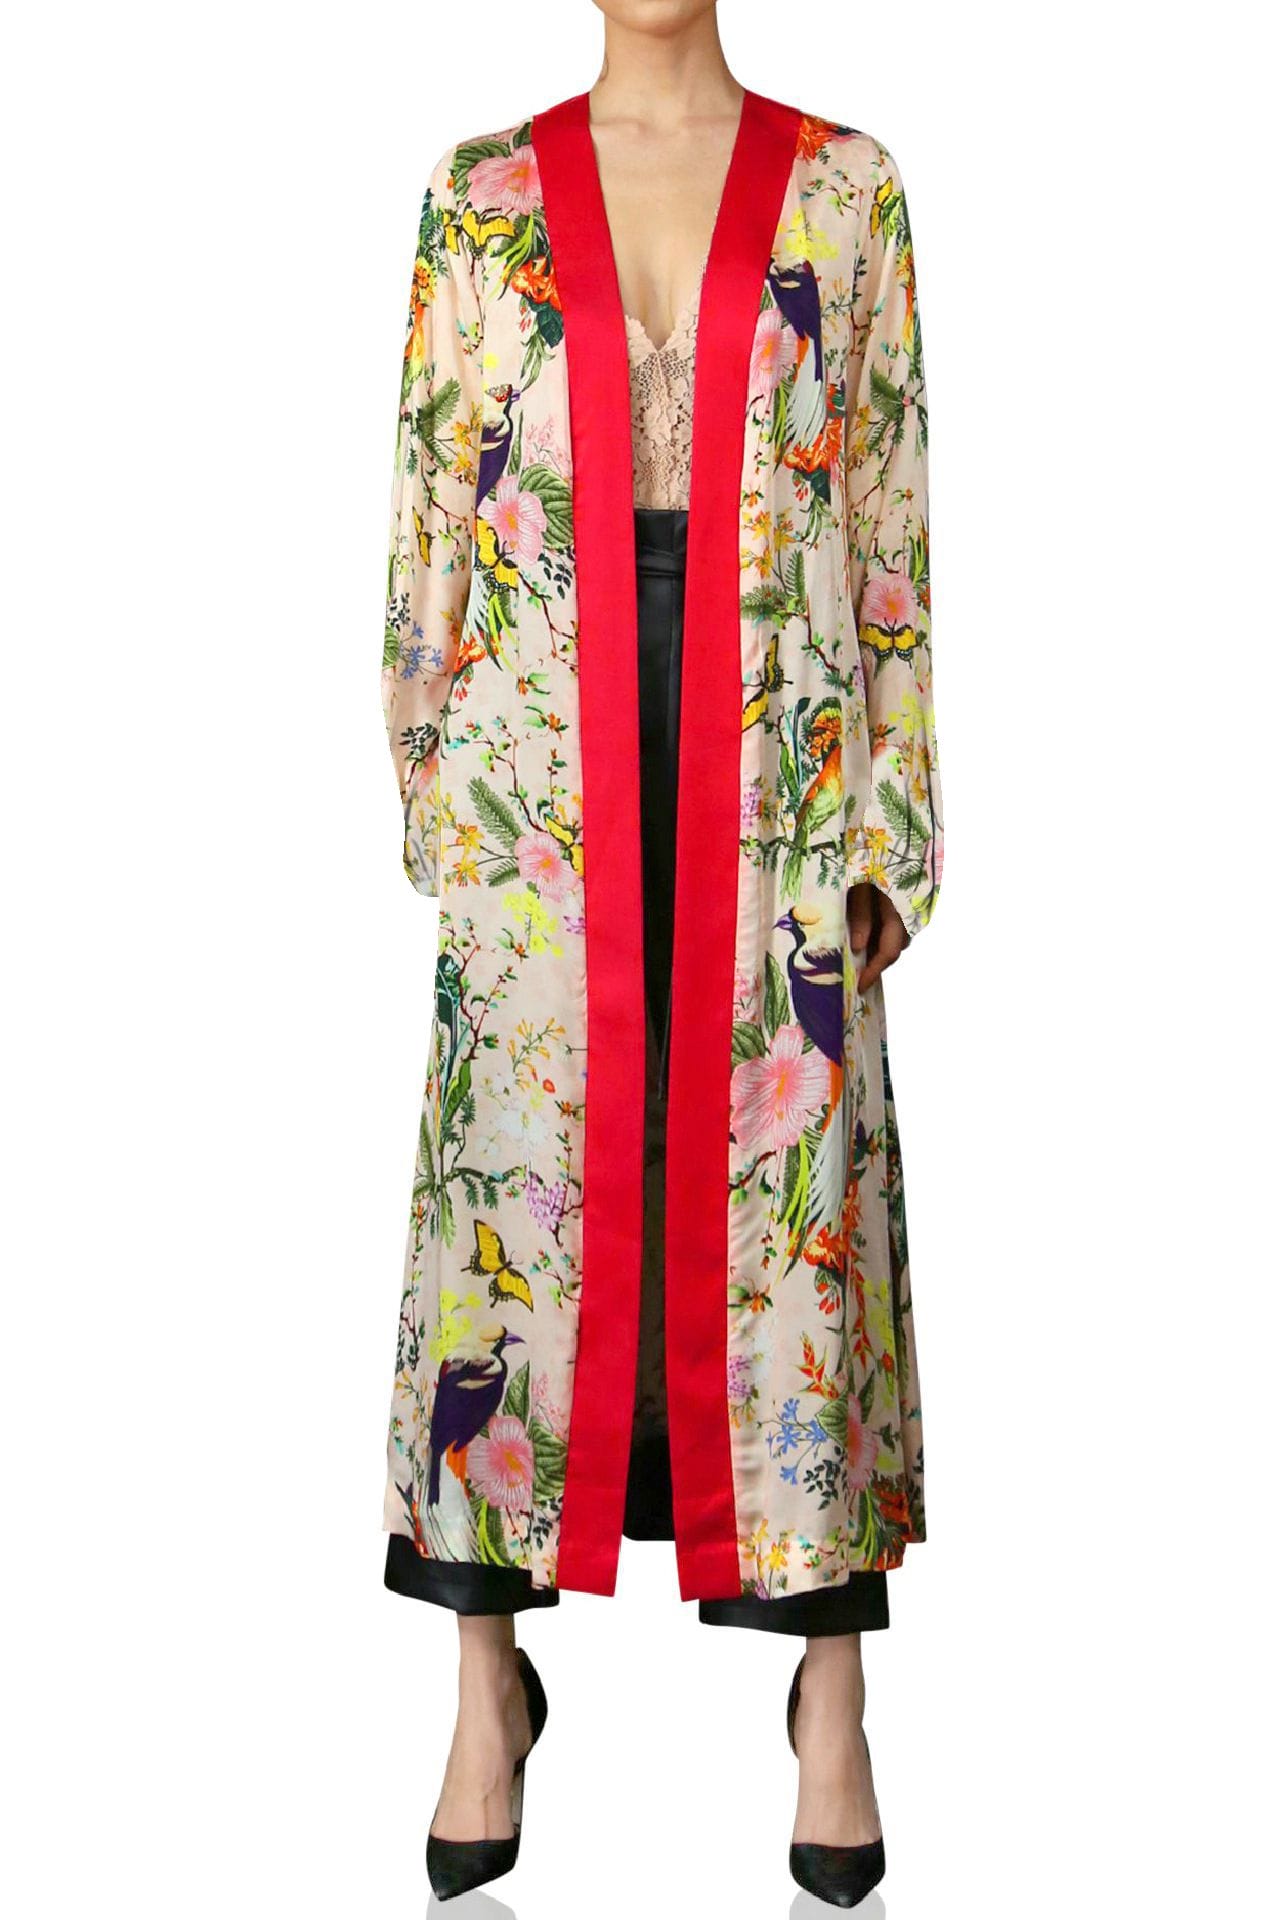 "kimono print" "womens long kimono robe" "Kyle X Shahida" "robe dress silk" "kimono print" "hot pink robe silk"